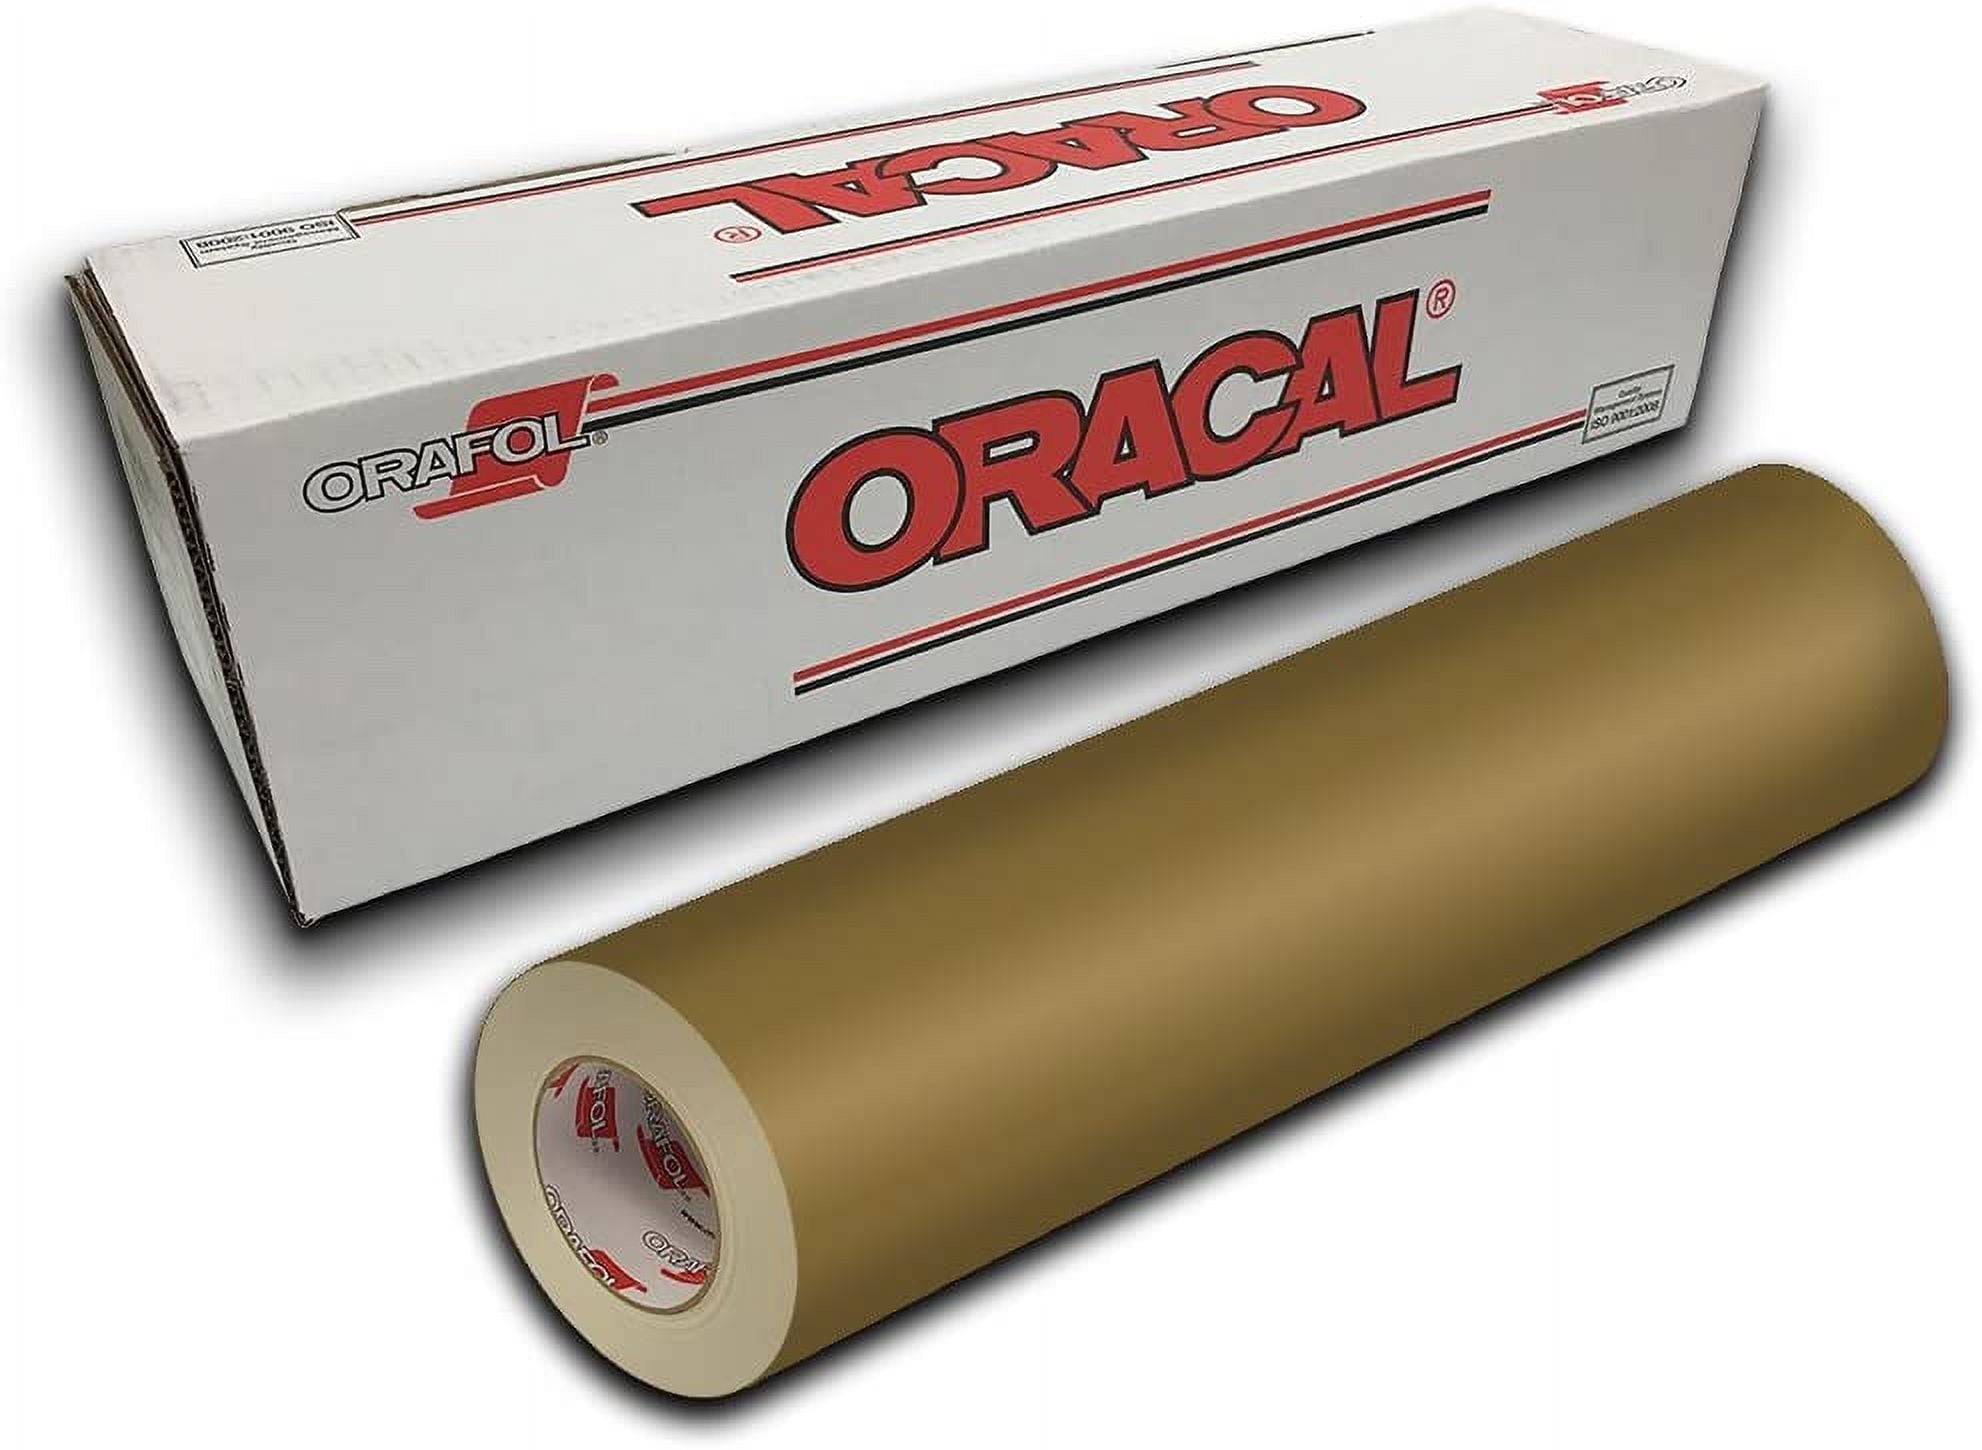 Oracal 651 Permanent Self-Adhesive Premium Craft Sticker Vinyl 24 x 30ft  (10yd) Roll - Transparent